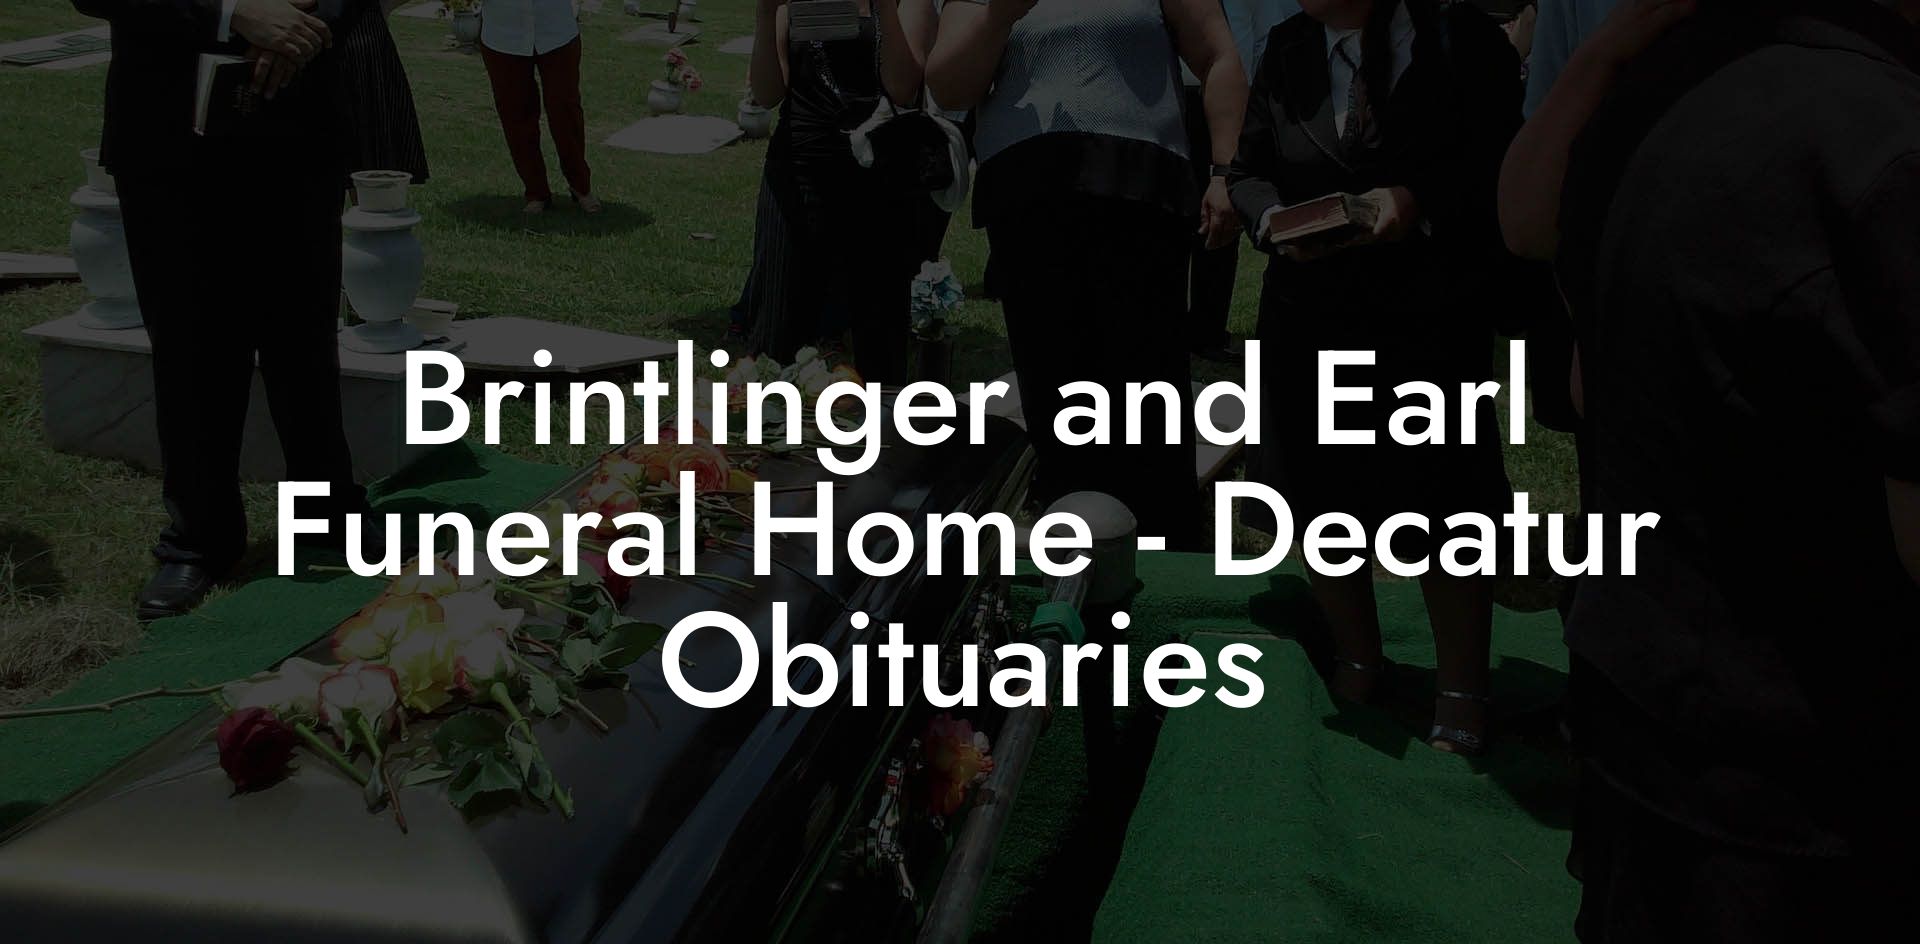 Brintlinger and Earl Funeral Home - Decatur Obituaries